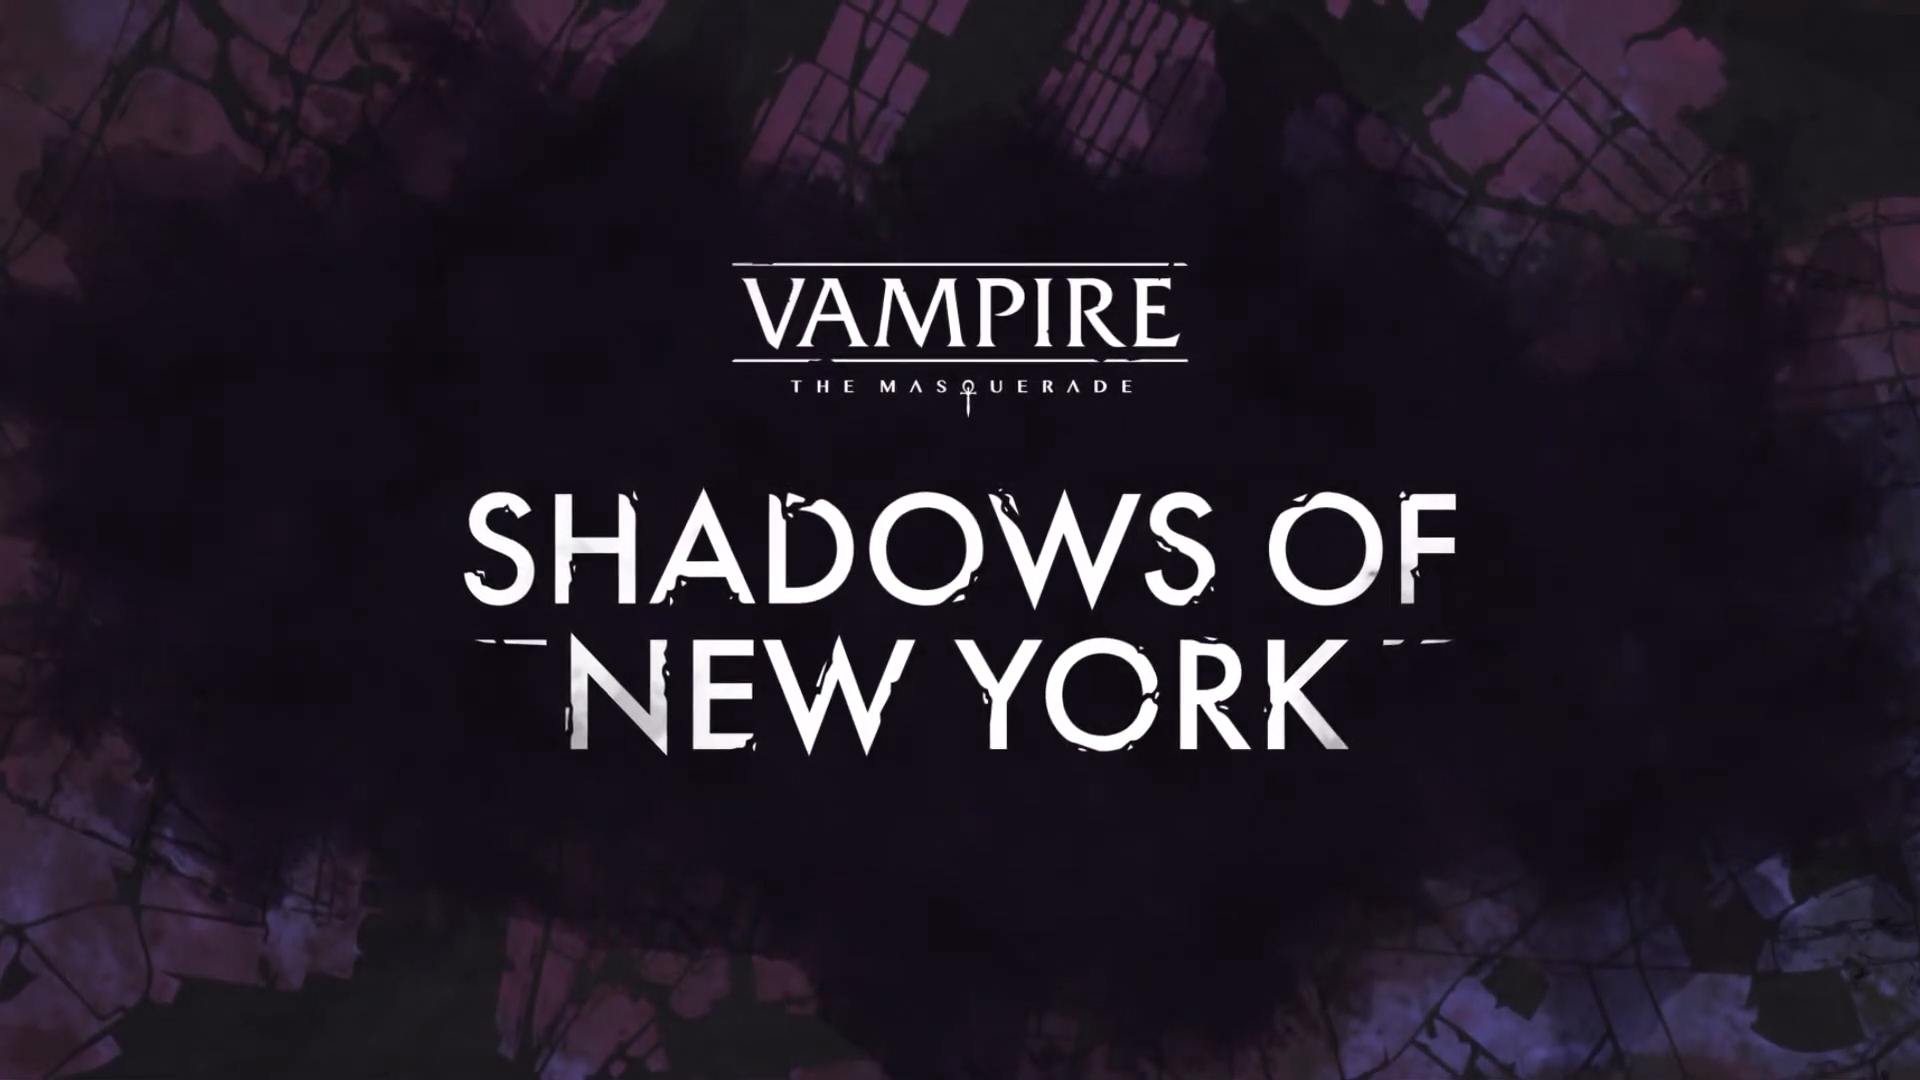 Vampire: The Masquerade - Shadows of New York